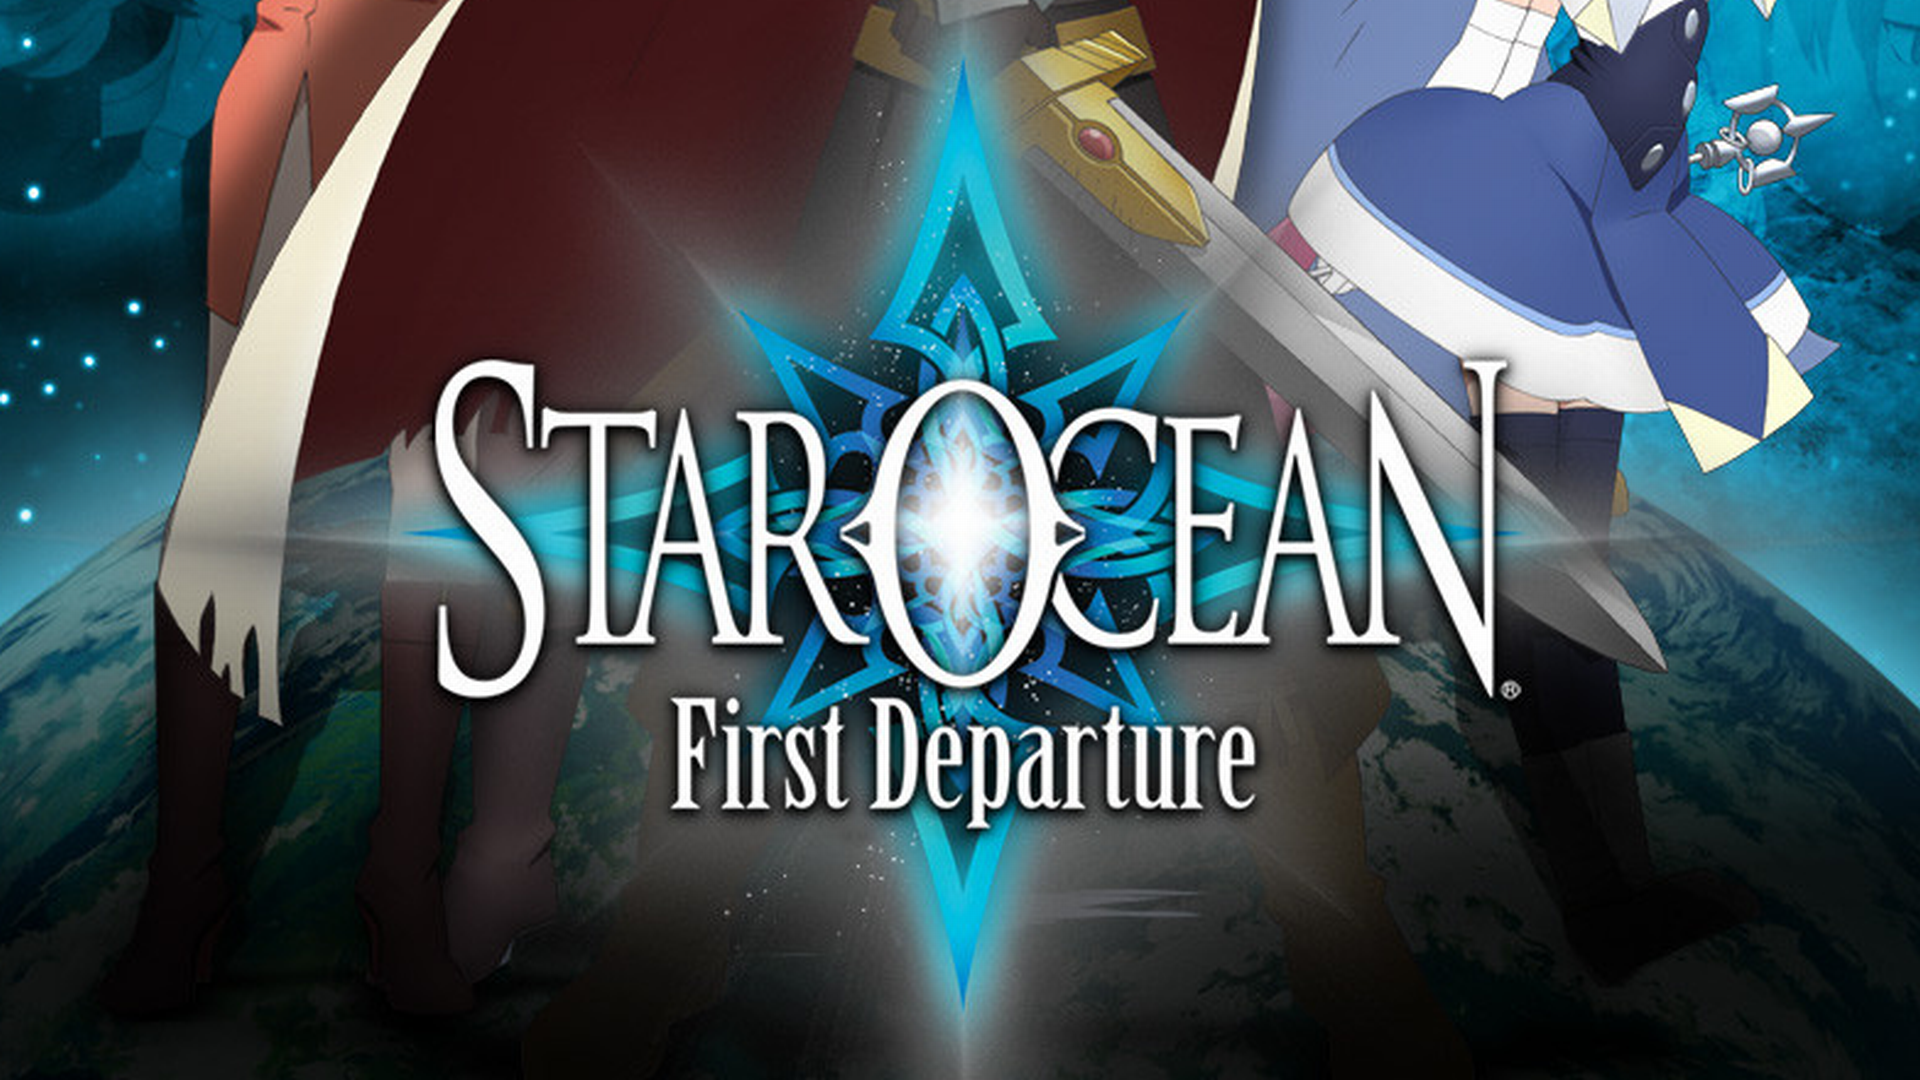 Star Ocean: First Departure HD wallpapers, Desktop wallpaper - most viewed